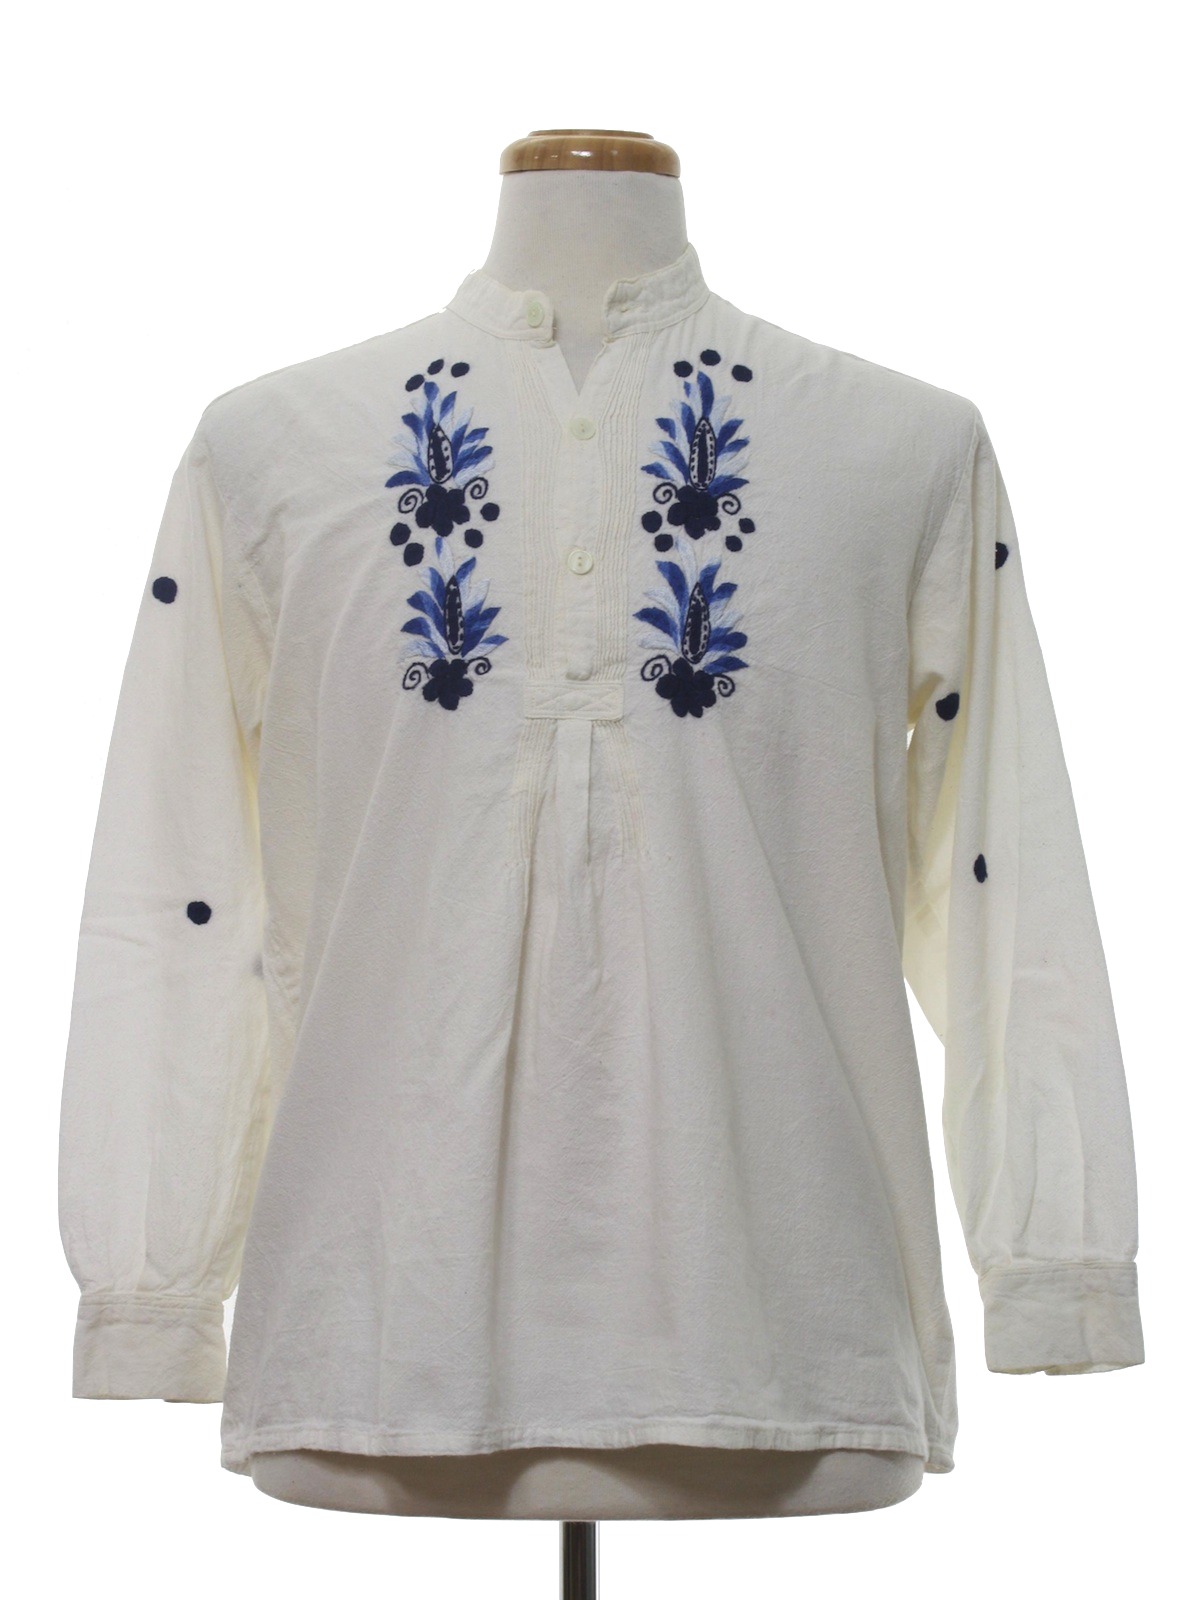 1970's Retro Hippie Shirt: 70s -no label- Mens natural white background ...